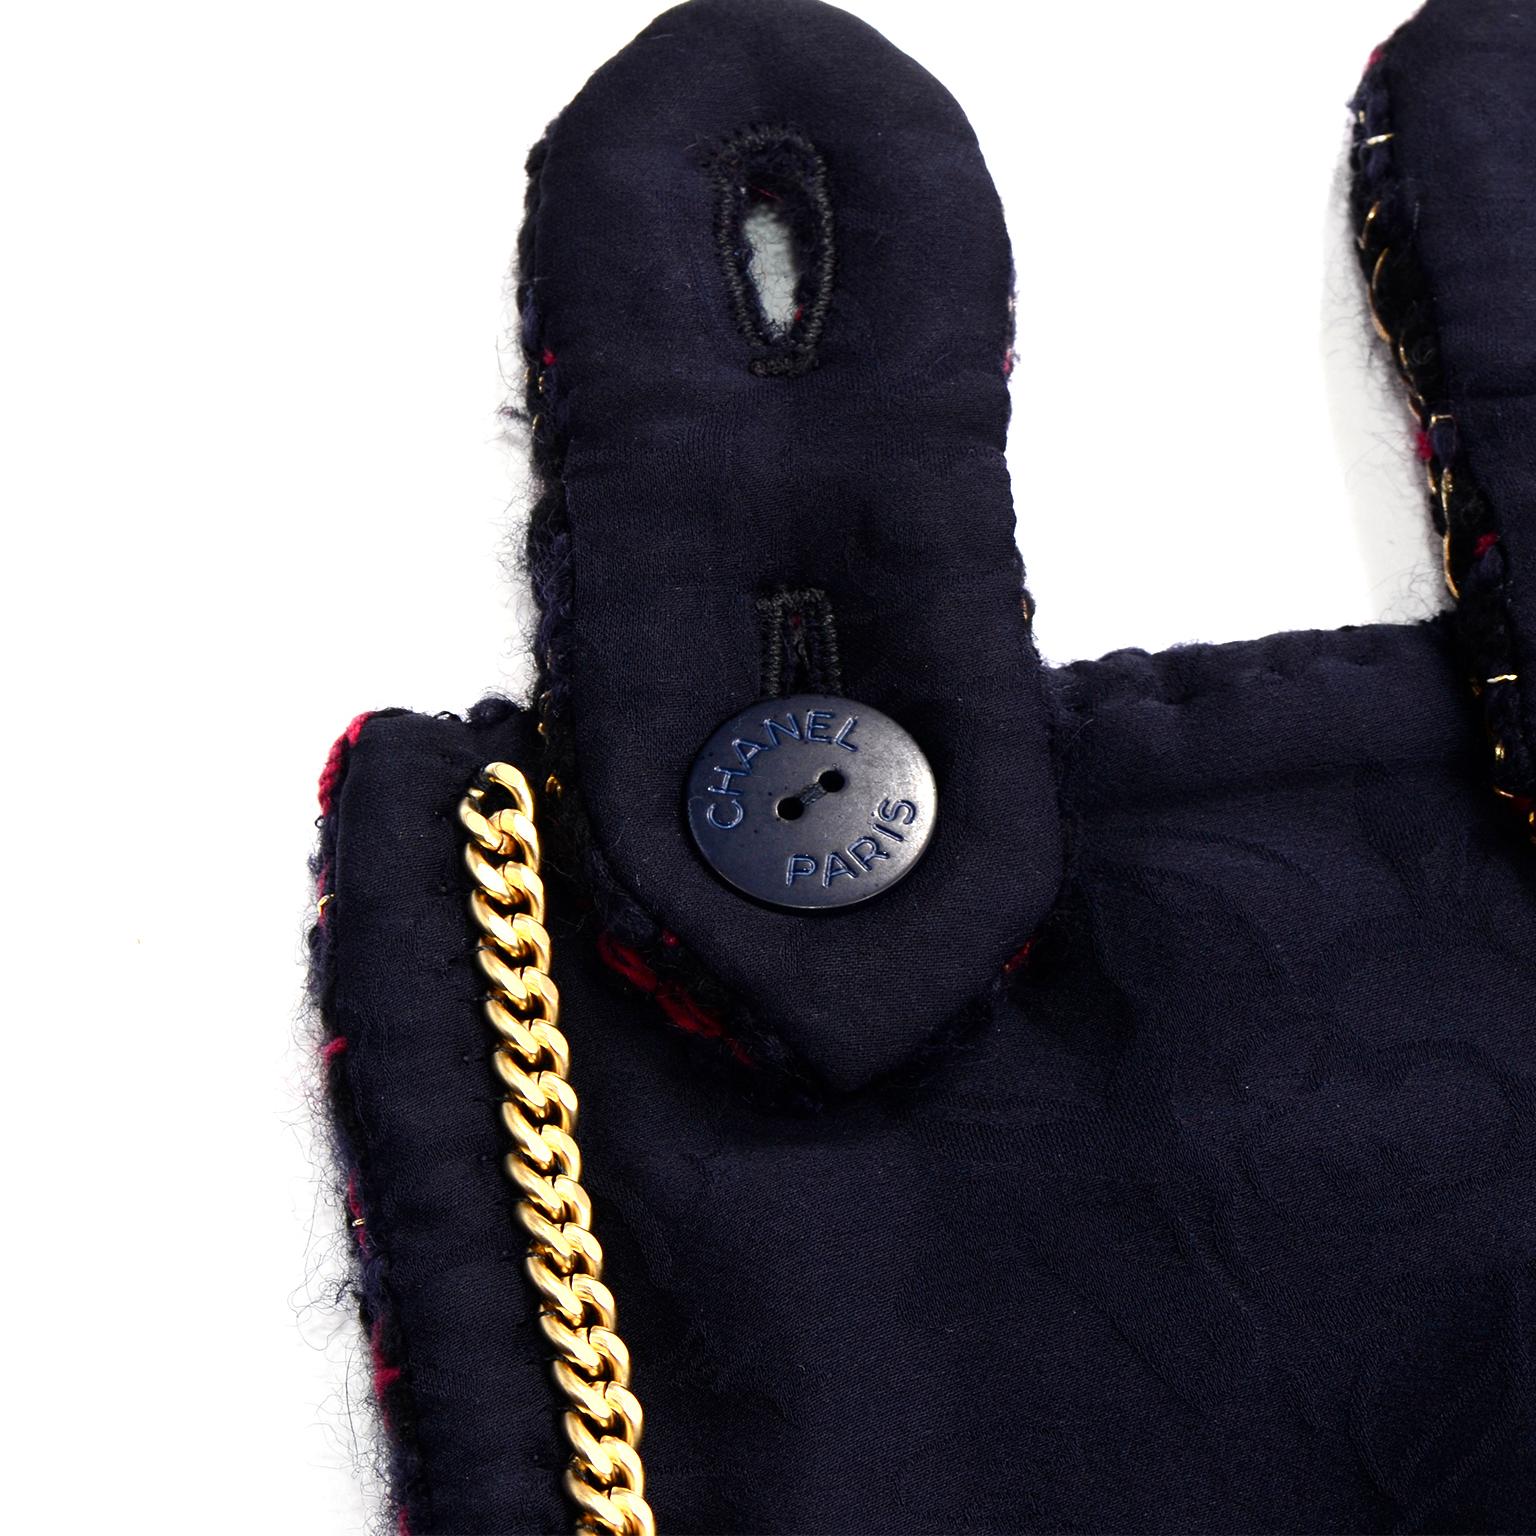 Chanel 2015 Paris Salzburg Collection $14250 Tweed Documented Runway Jacket 2